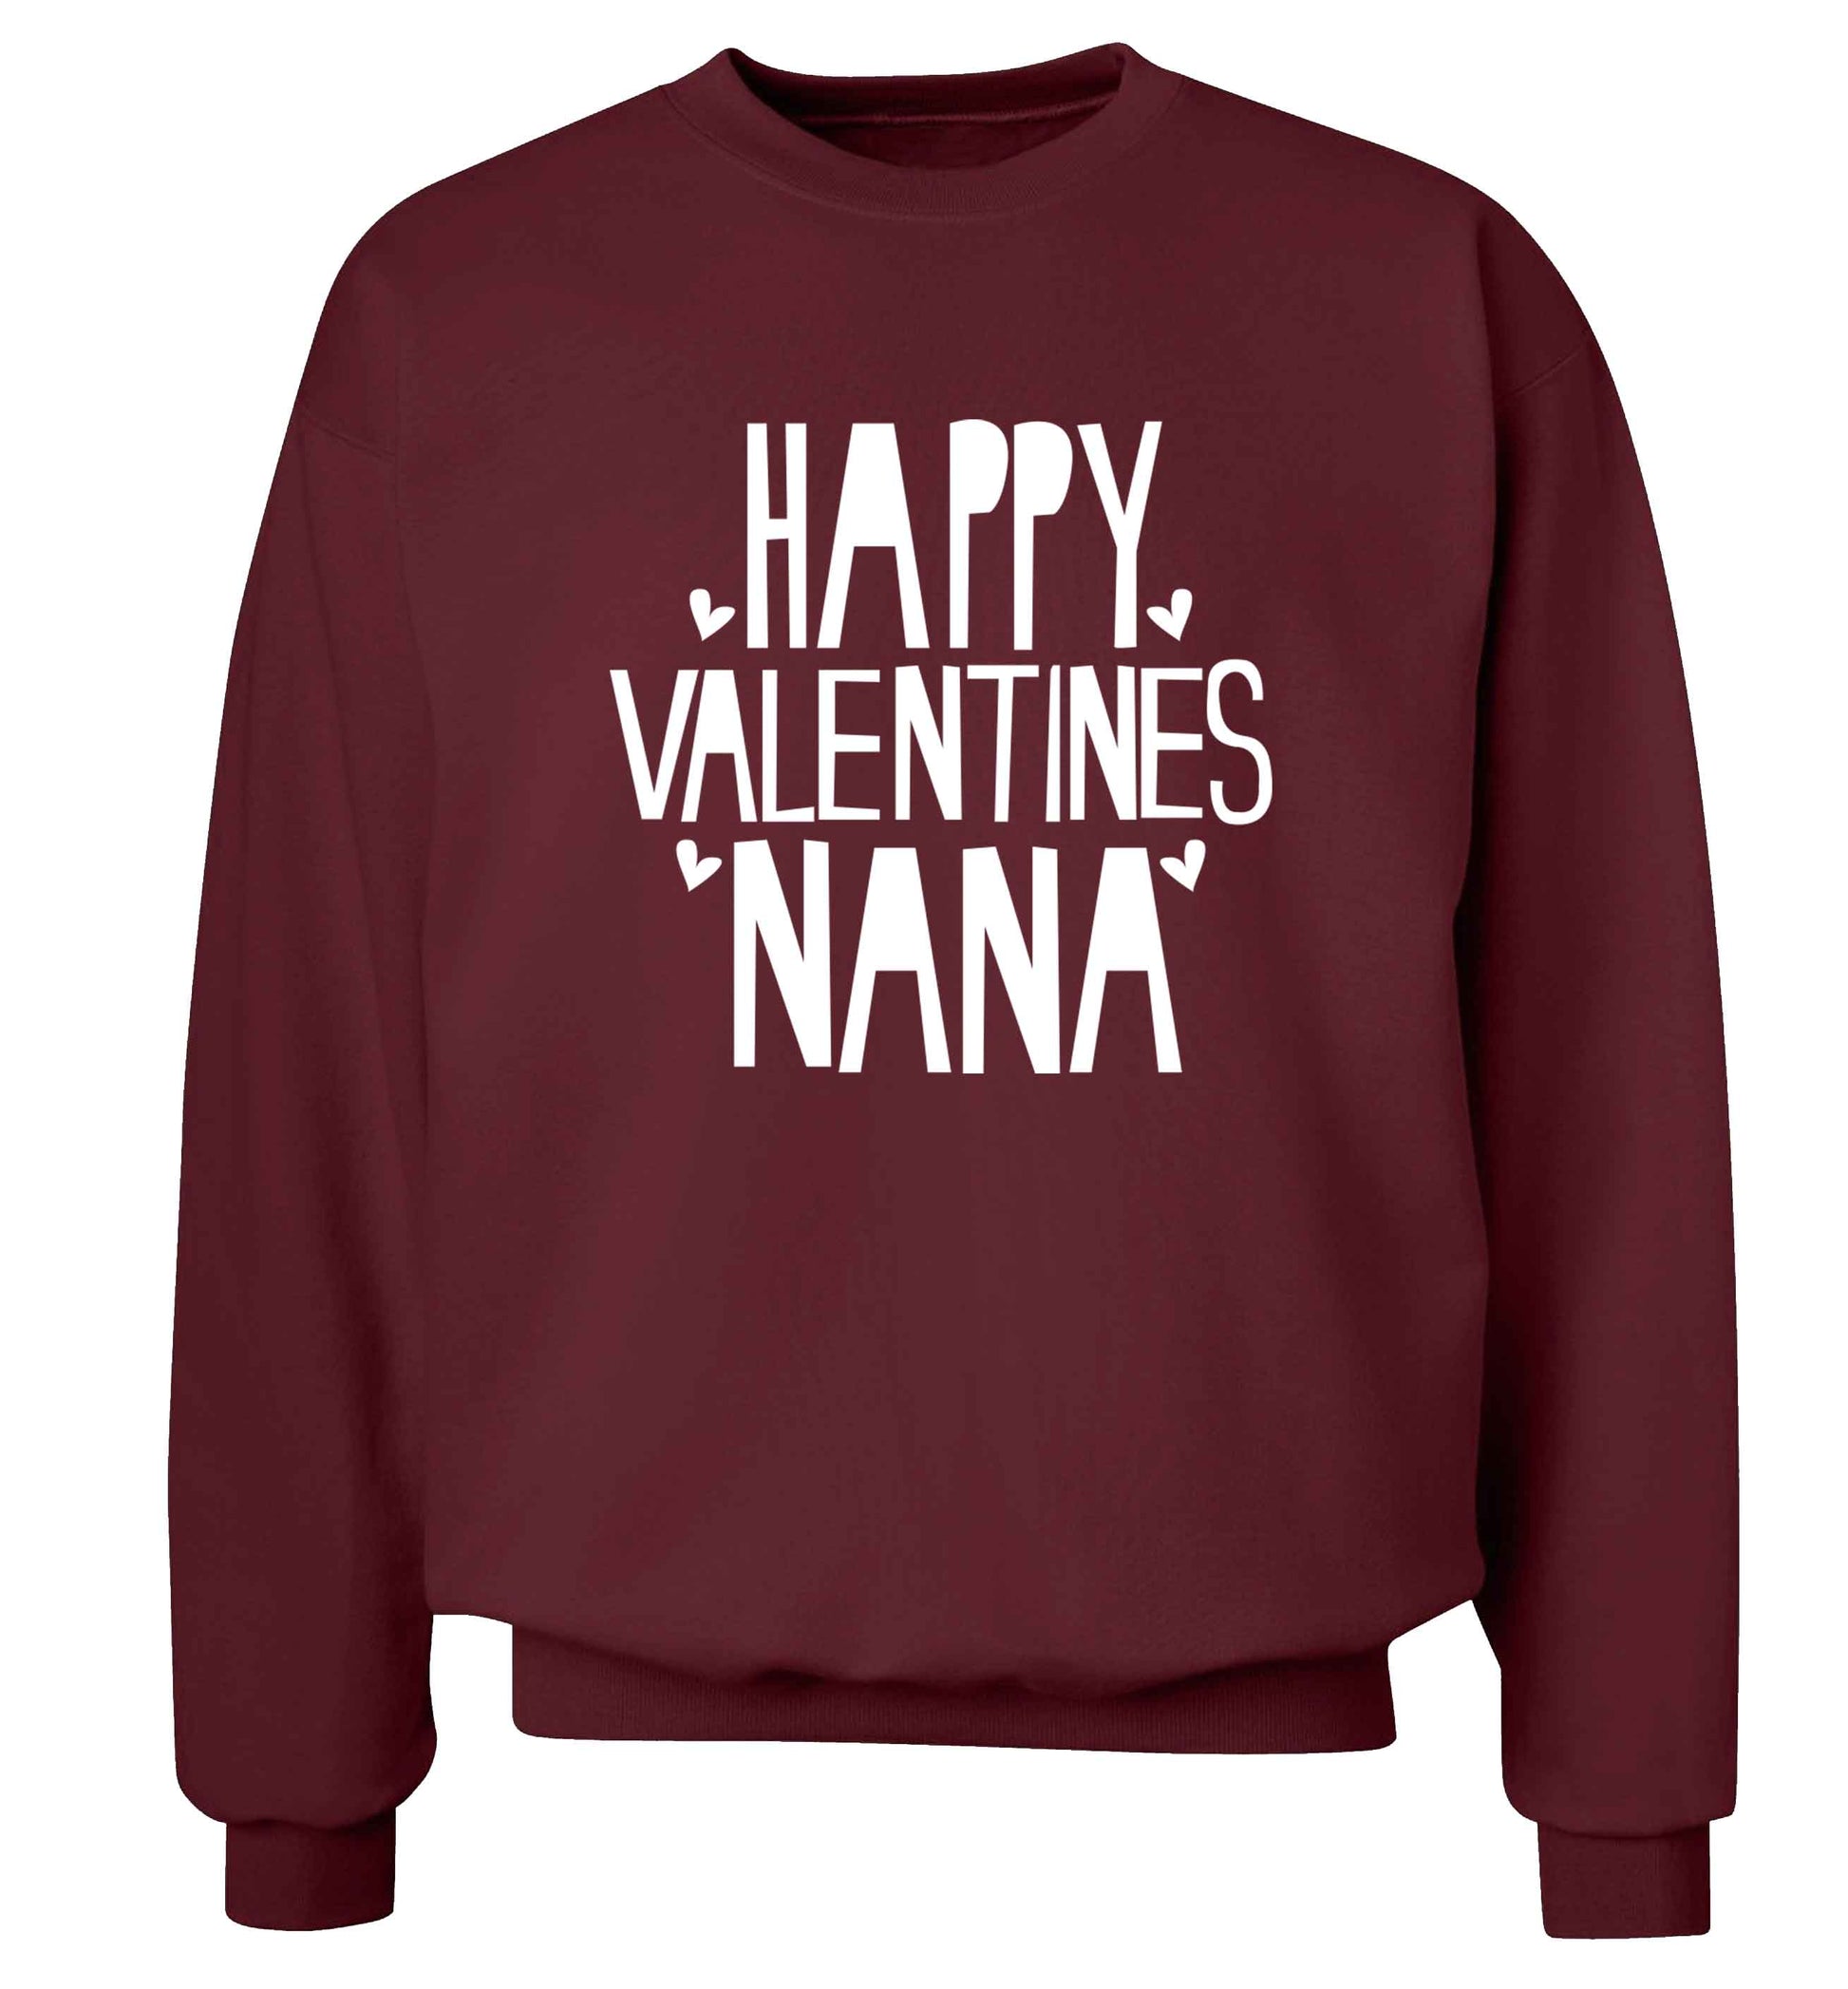 Happy valentines nana adult's unisex maroon sweater 2XL